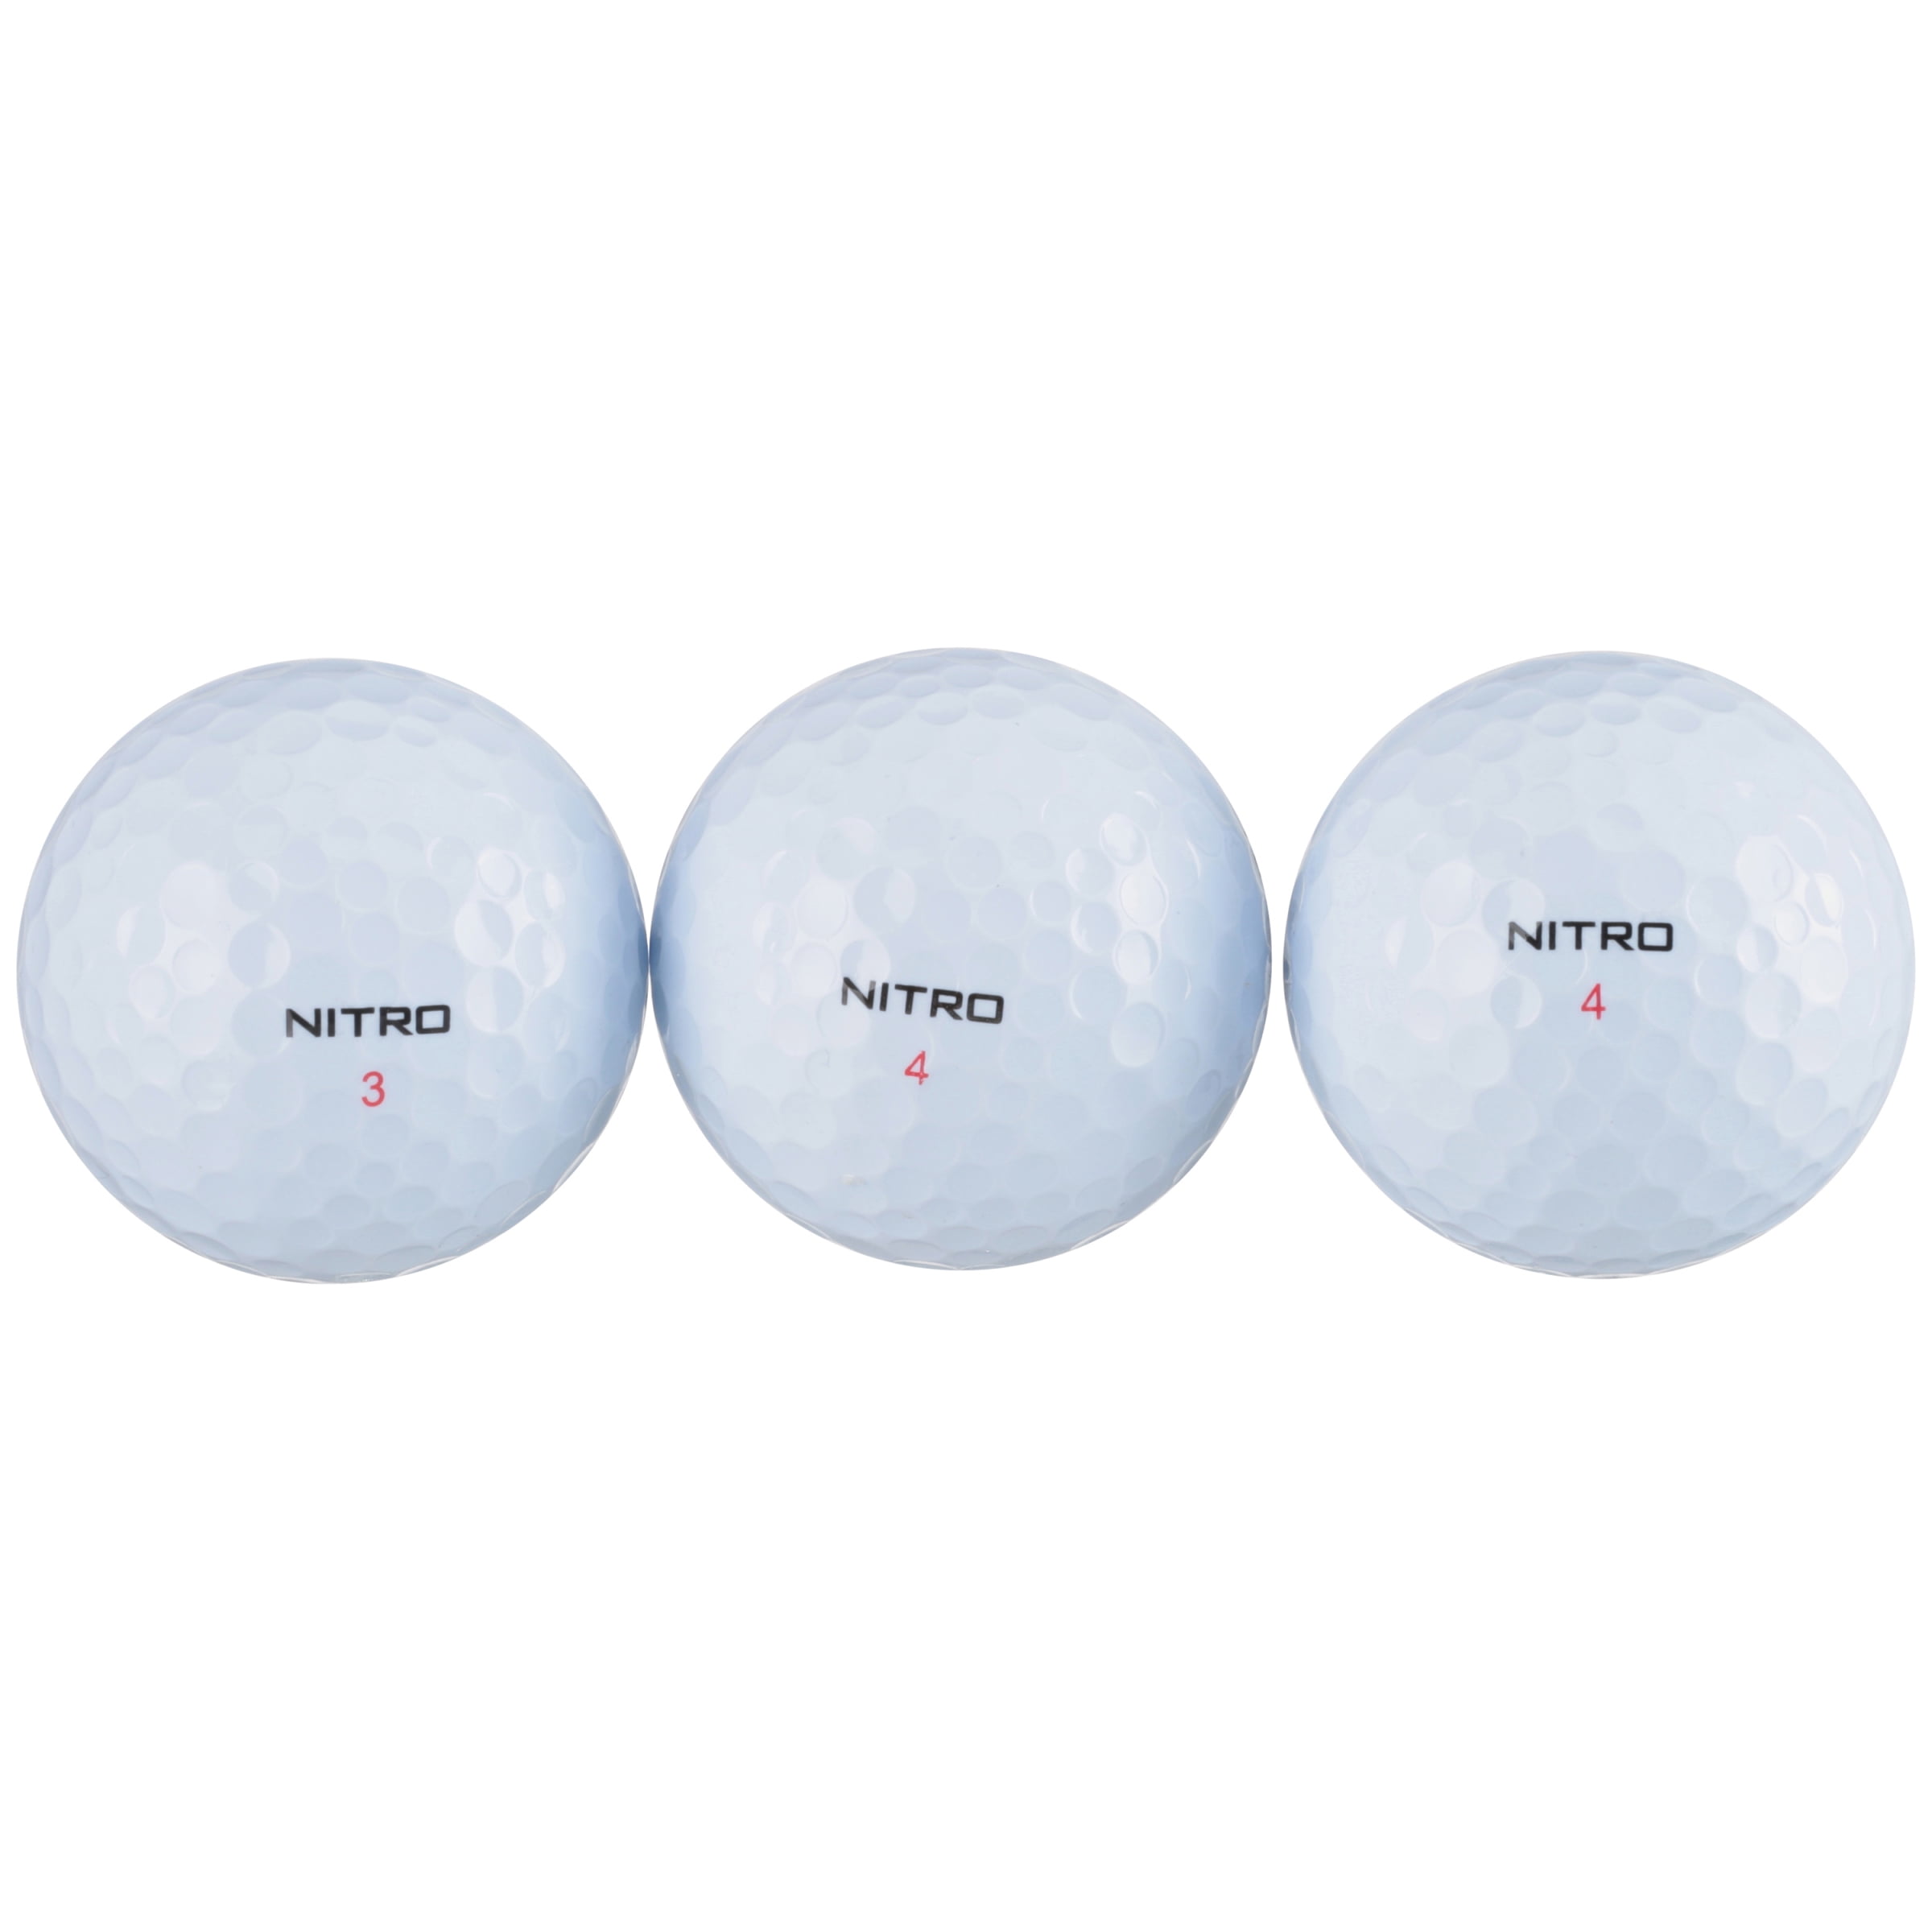 Nitro Golf Ultimate Distance Golf Balls, White, 45 Pack - Walmart.com